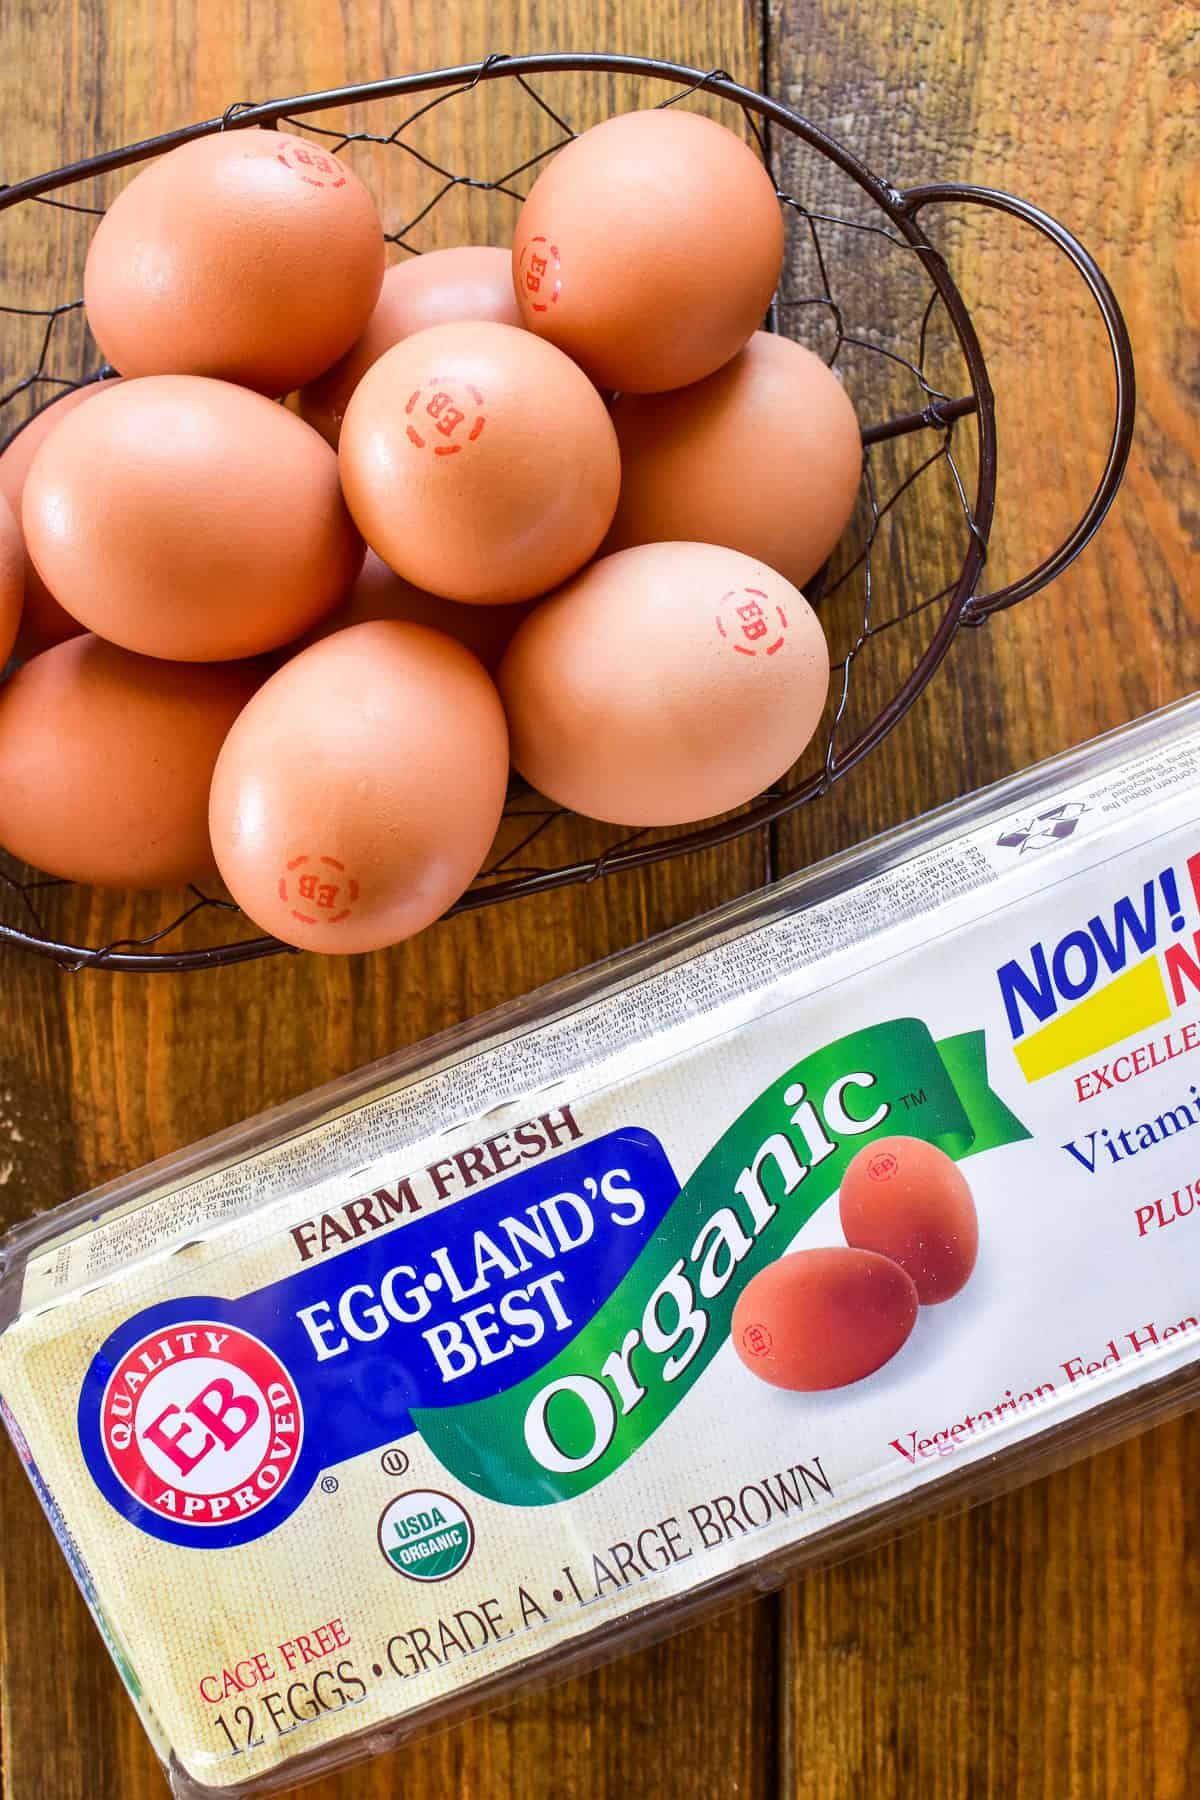 Eggland's Best Organic eggs